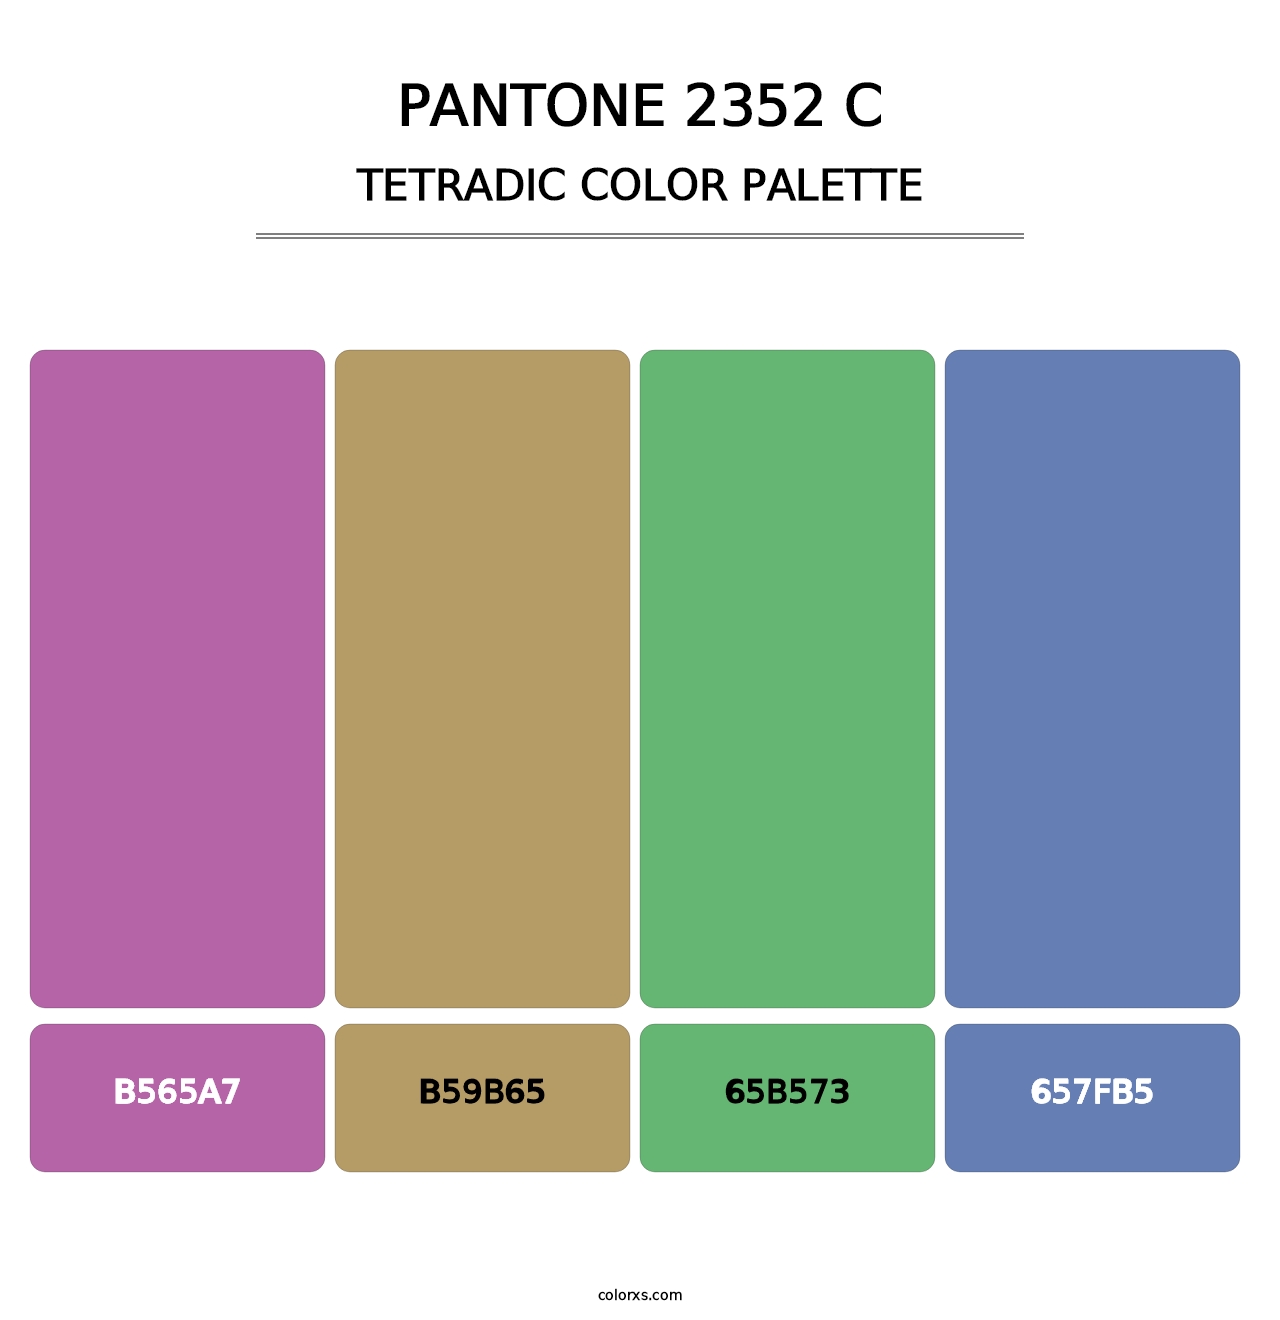 PANTONE 2352 C - Tetradic Color Palette